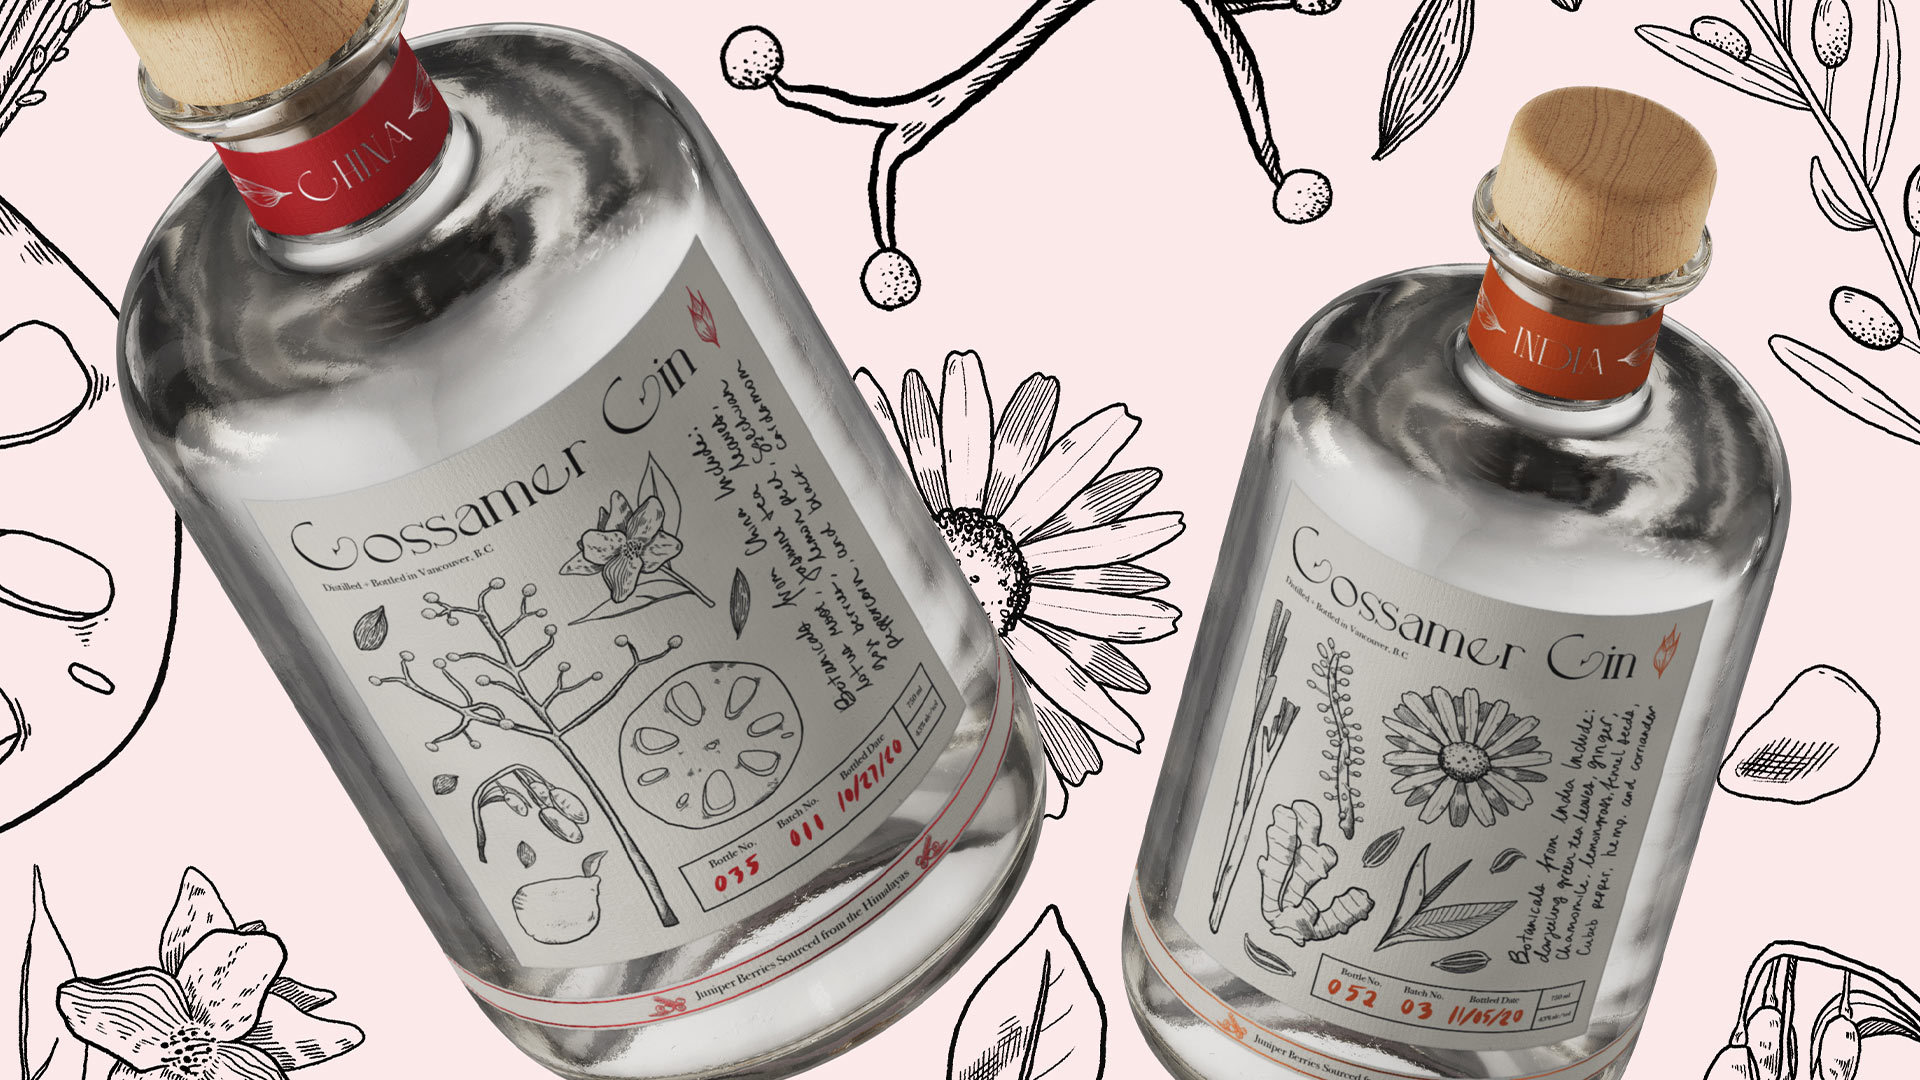 Two elegant gin bottles with beautiful botanical illustrations.